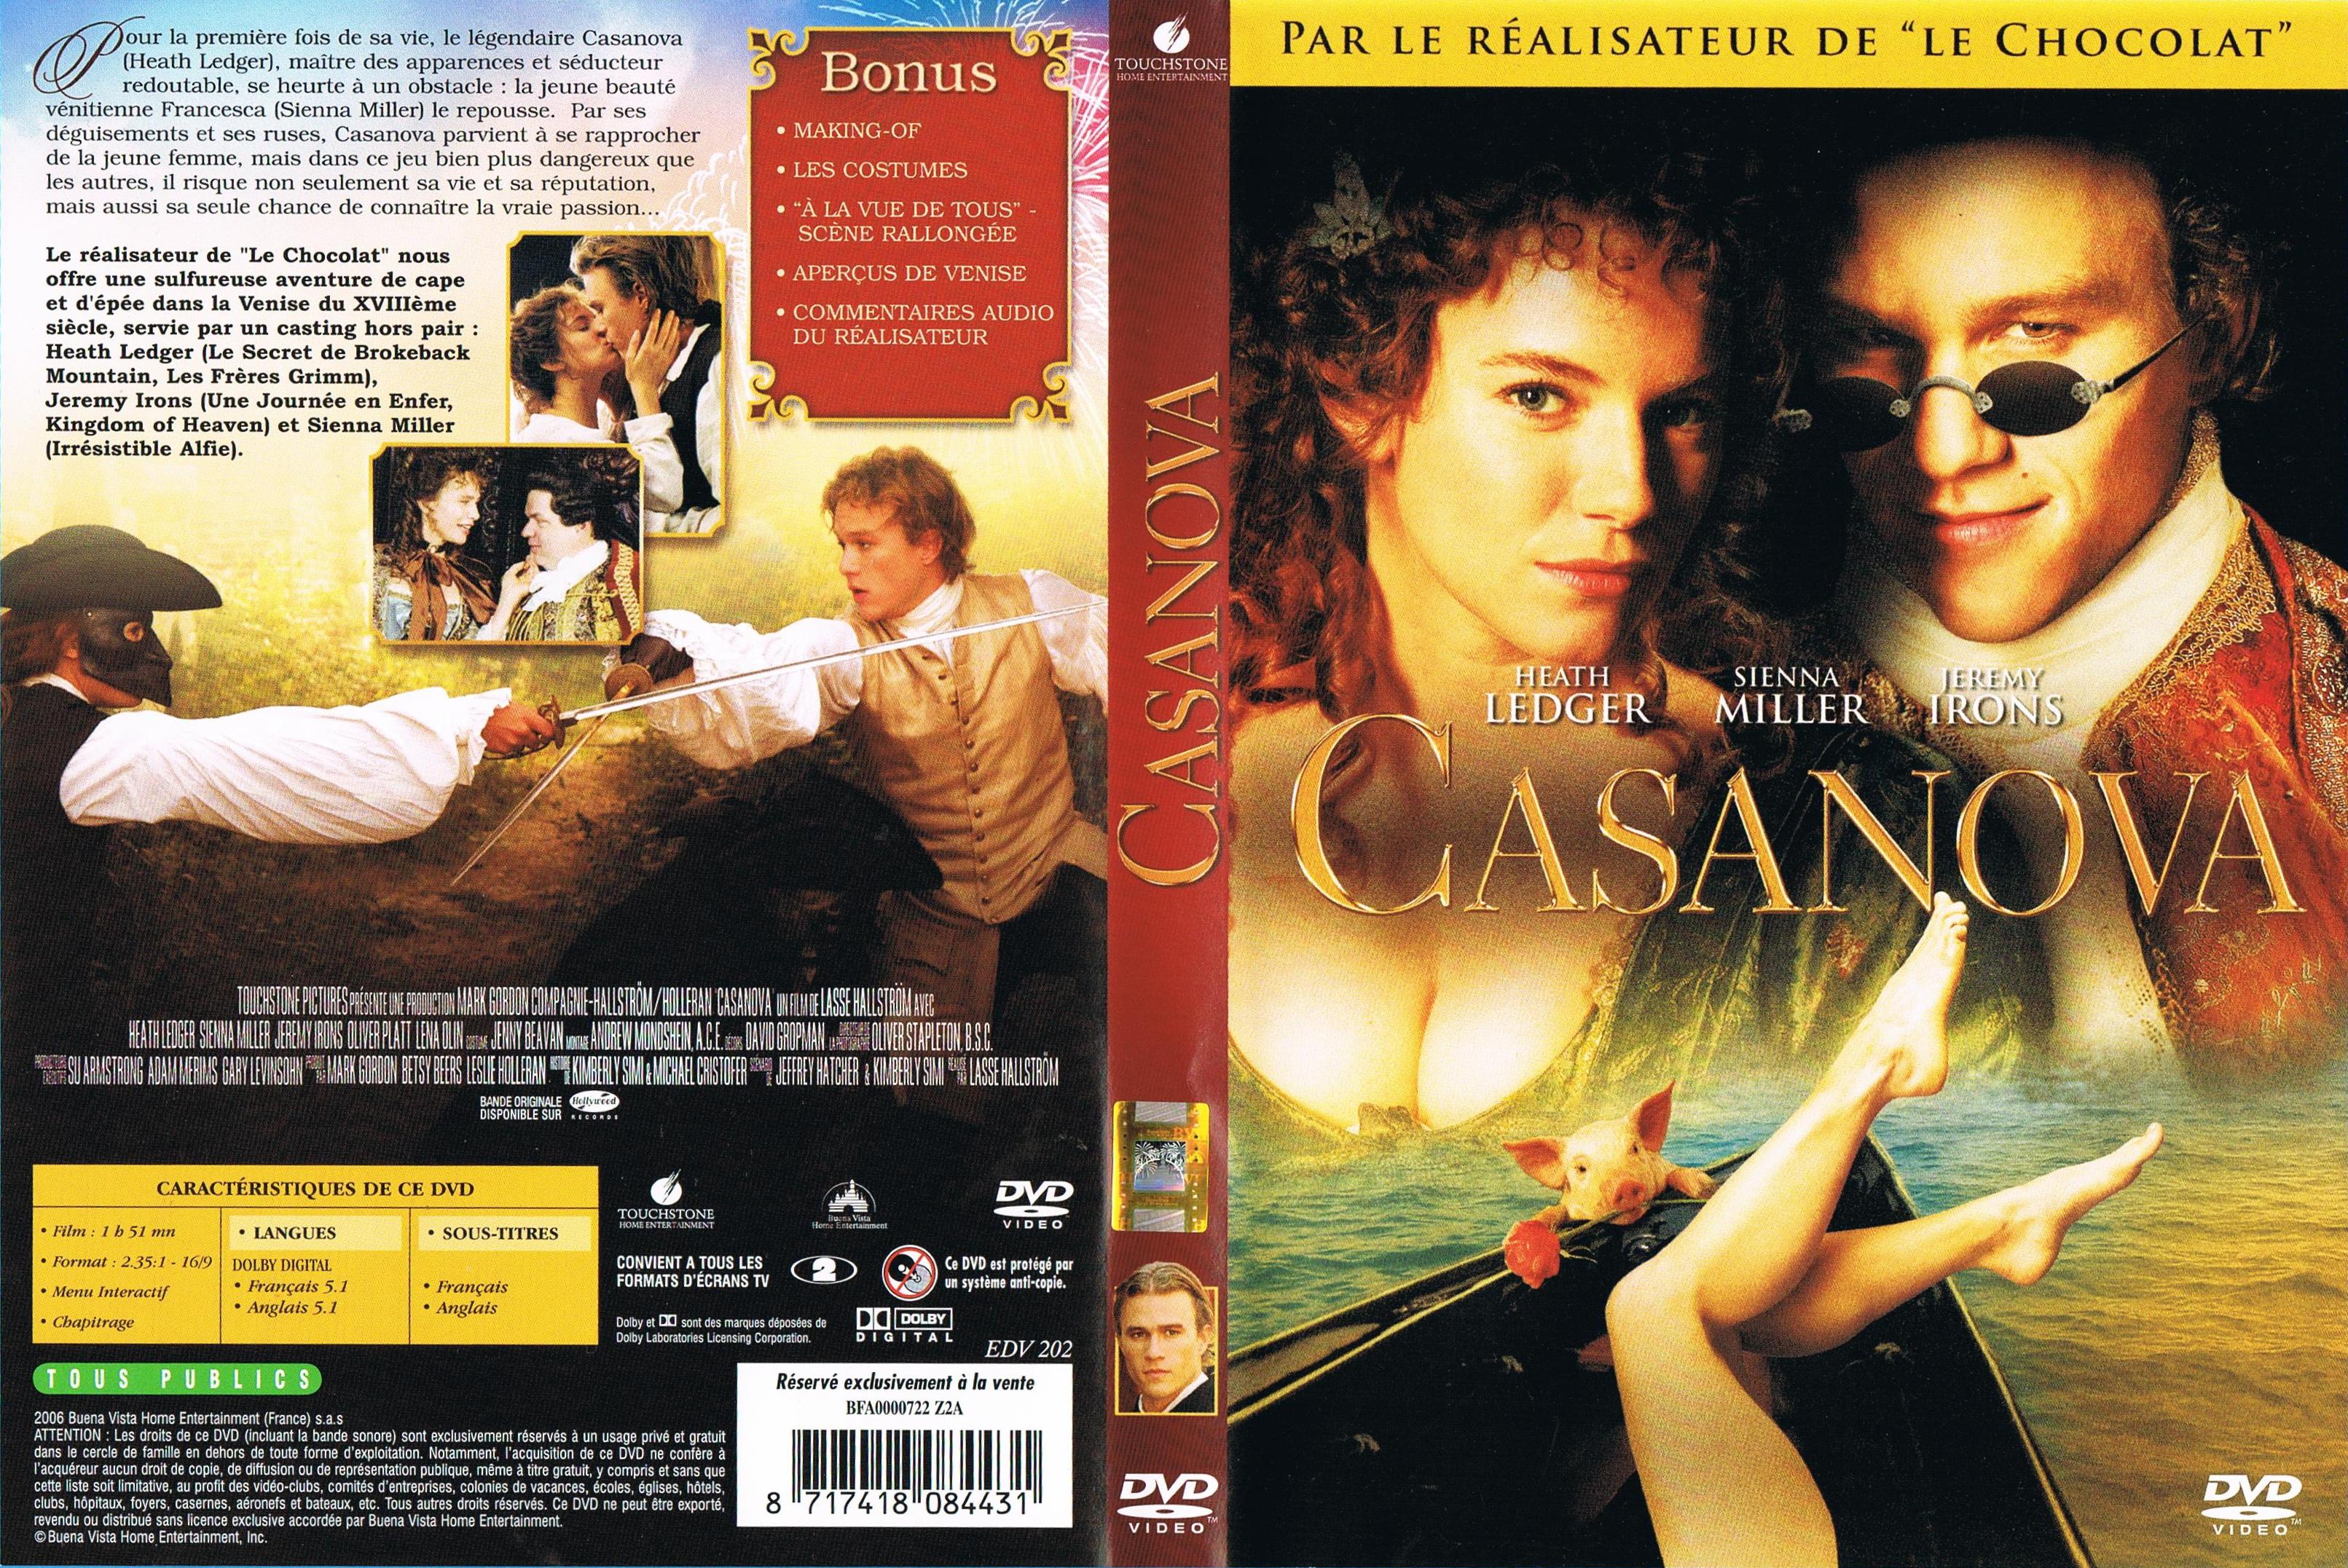 Jaquette DVD Casanova (2005) v2